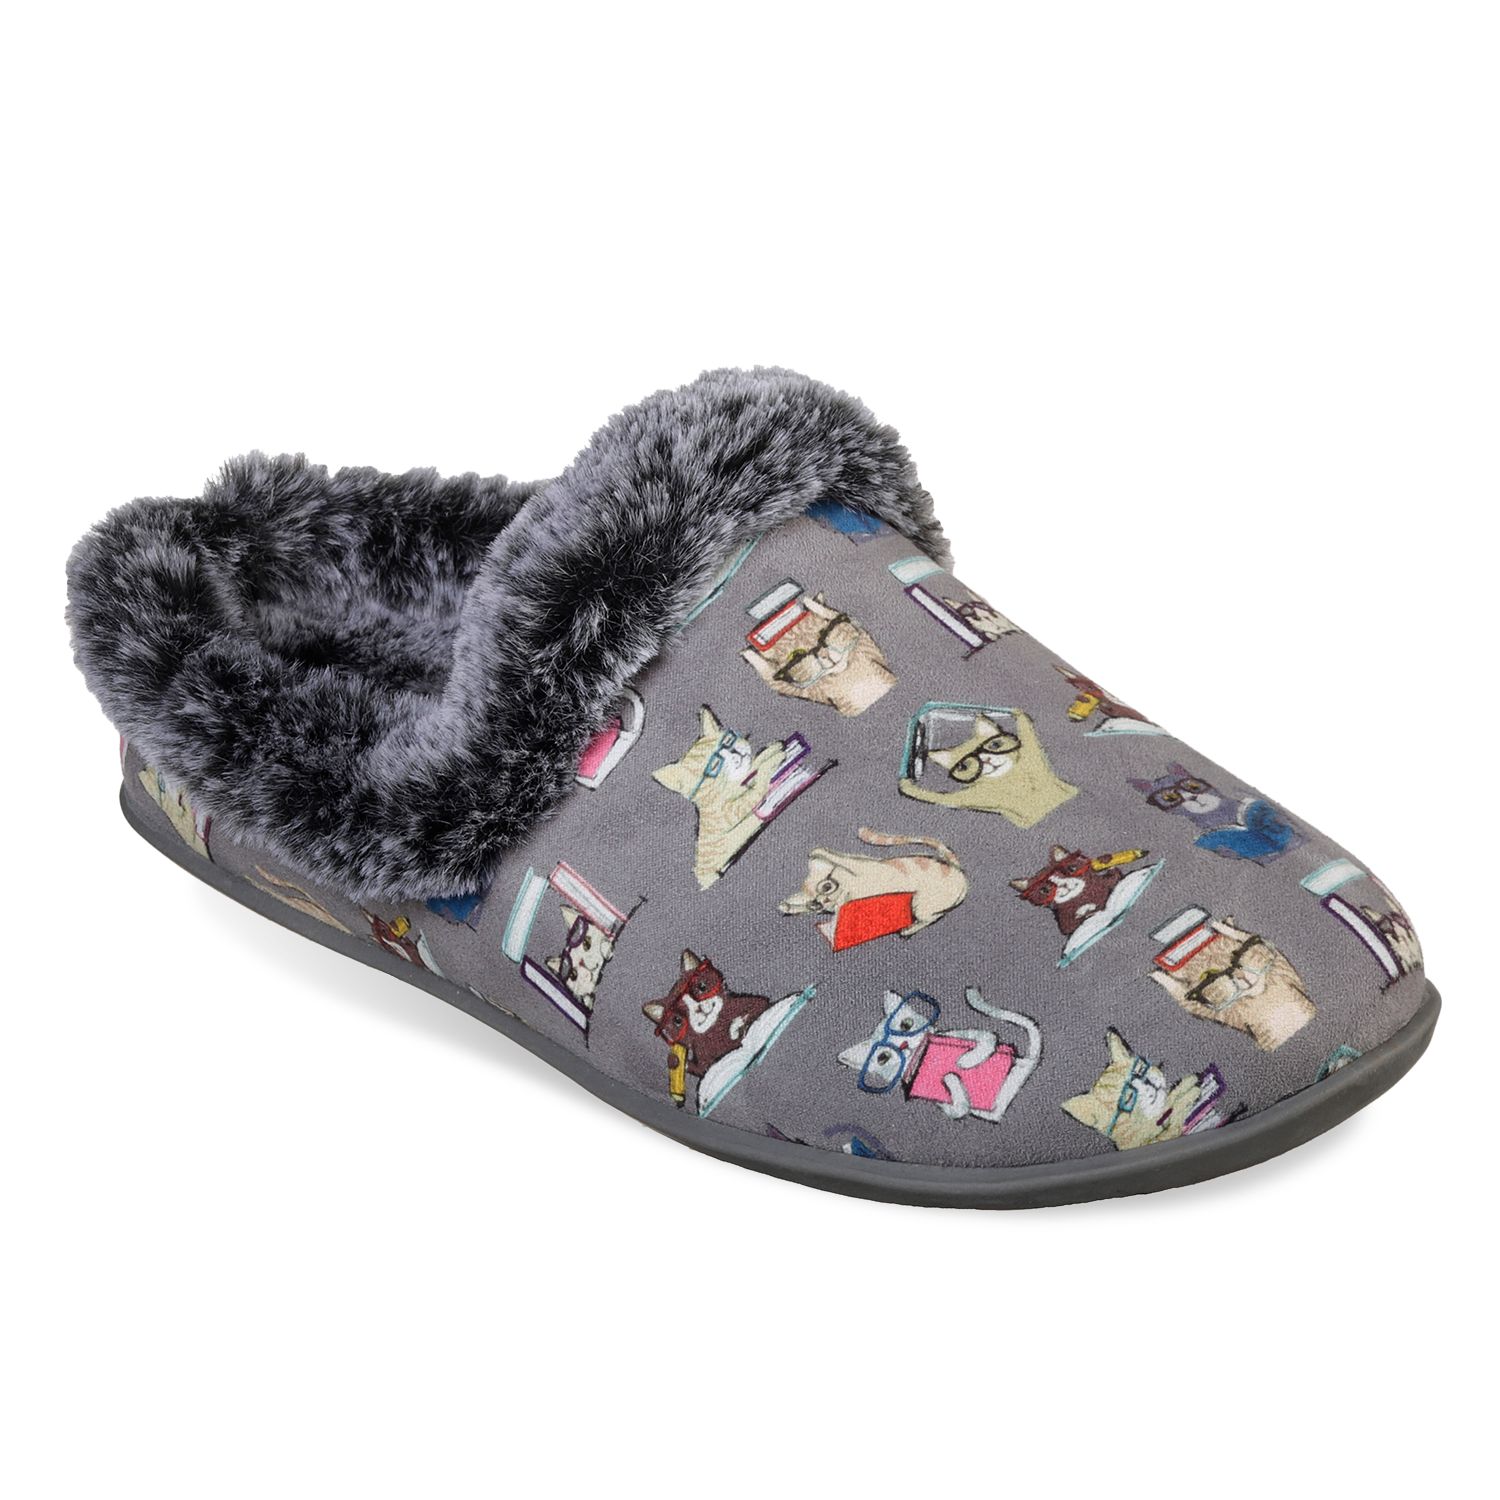 skechers bobs slippers sale